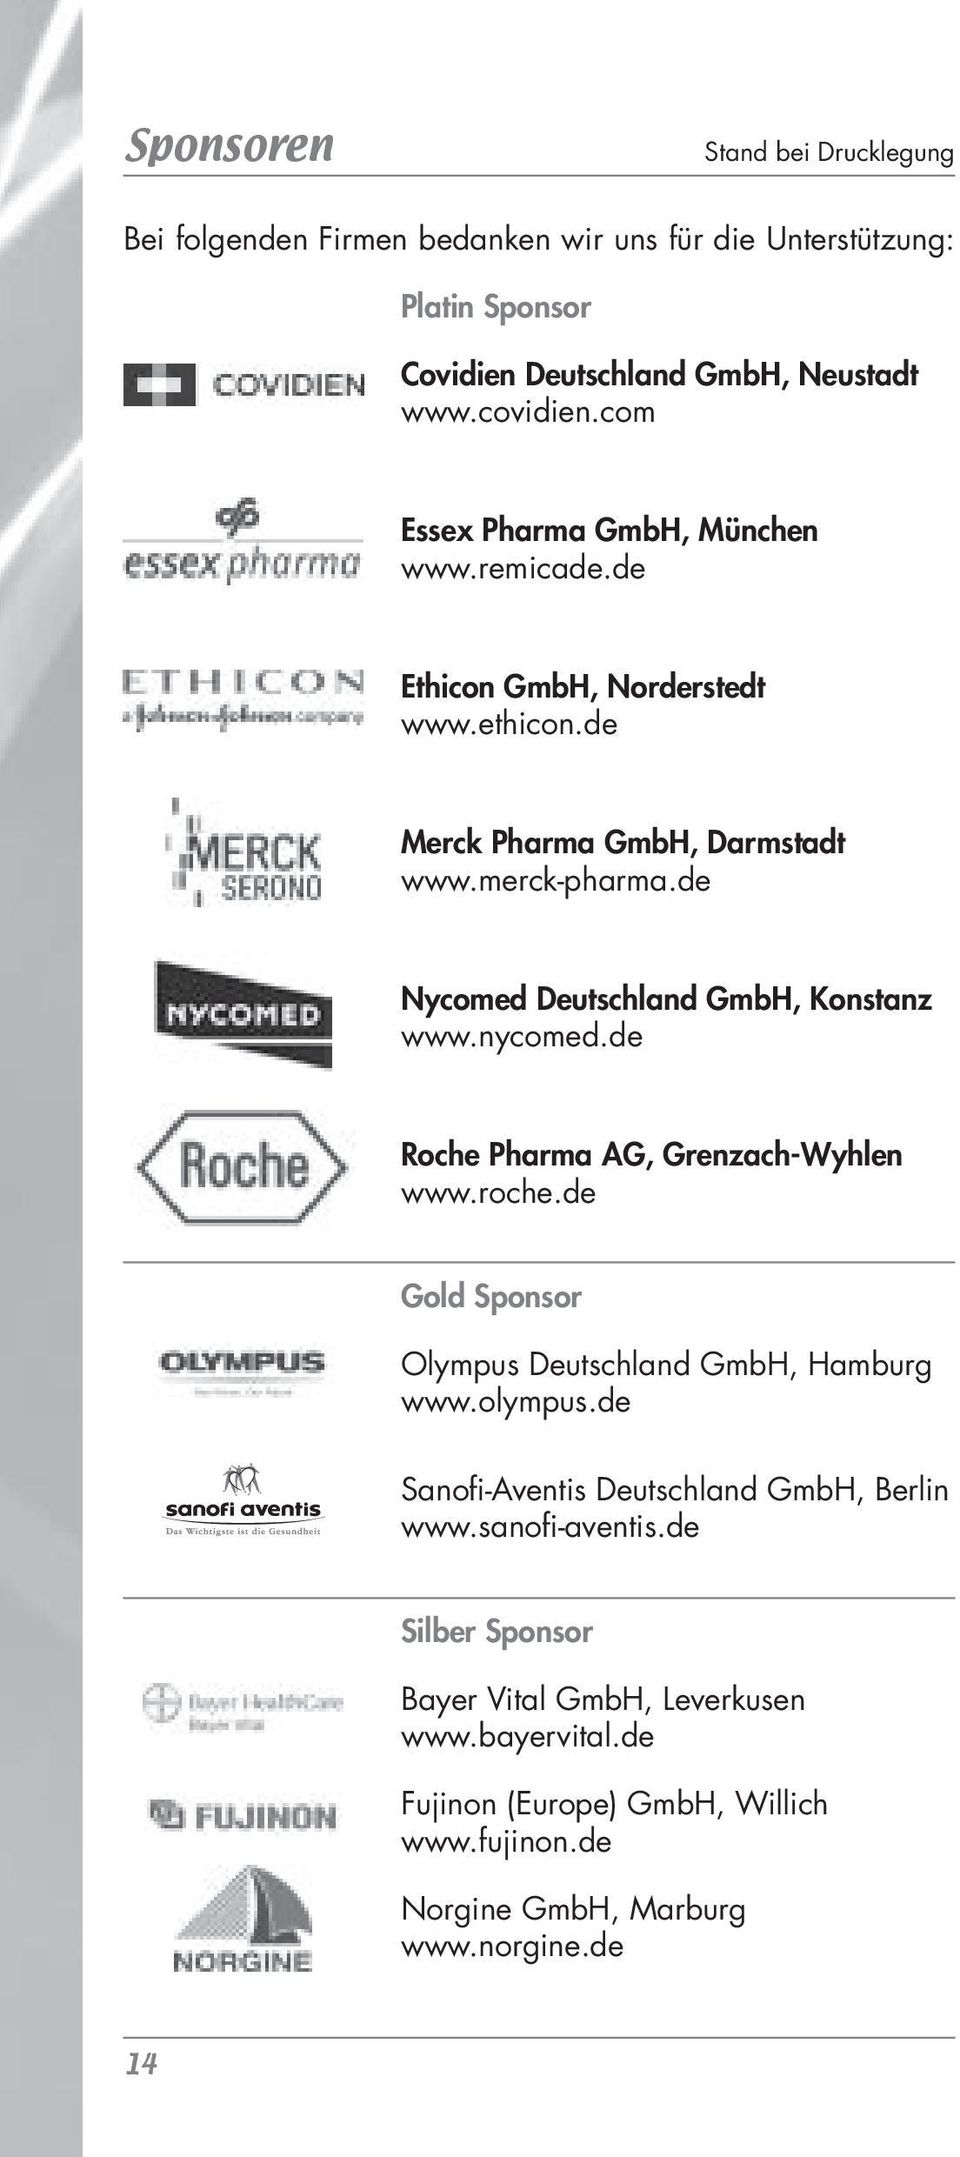 de Nycomed Deutschland GmbH, Konstanz www.nycomed.de Roche Pharma AG, Grenzach-Wyhlen www.roche.de Gold Sponsor Olympus Deutschland GmbH, Hamburg www.olympus.